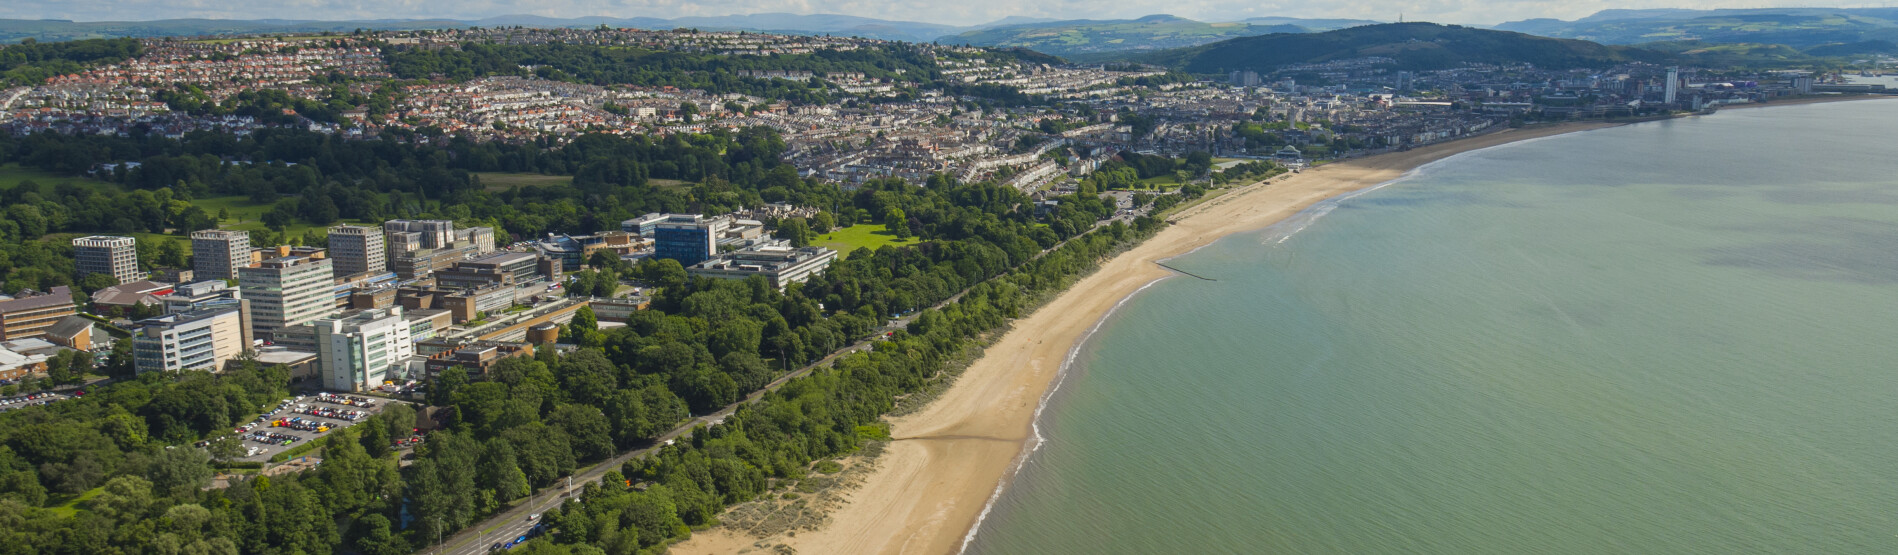 Swansea university aerial image